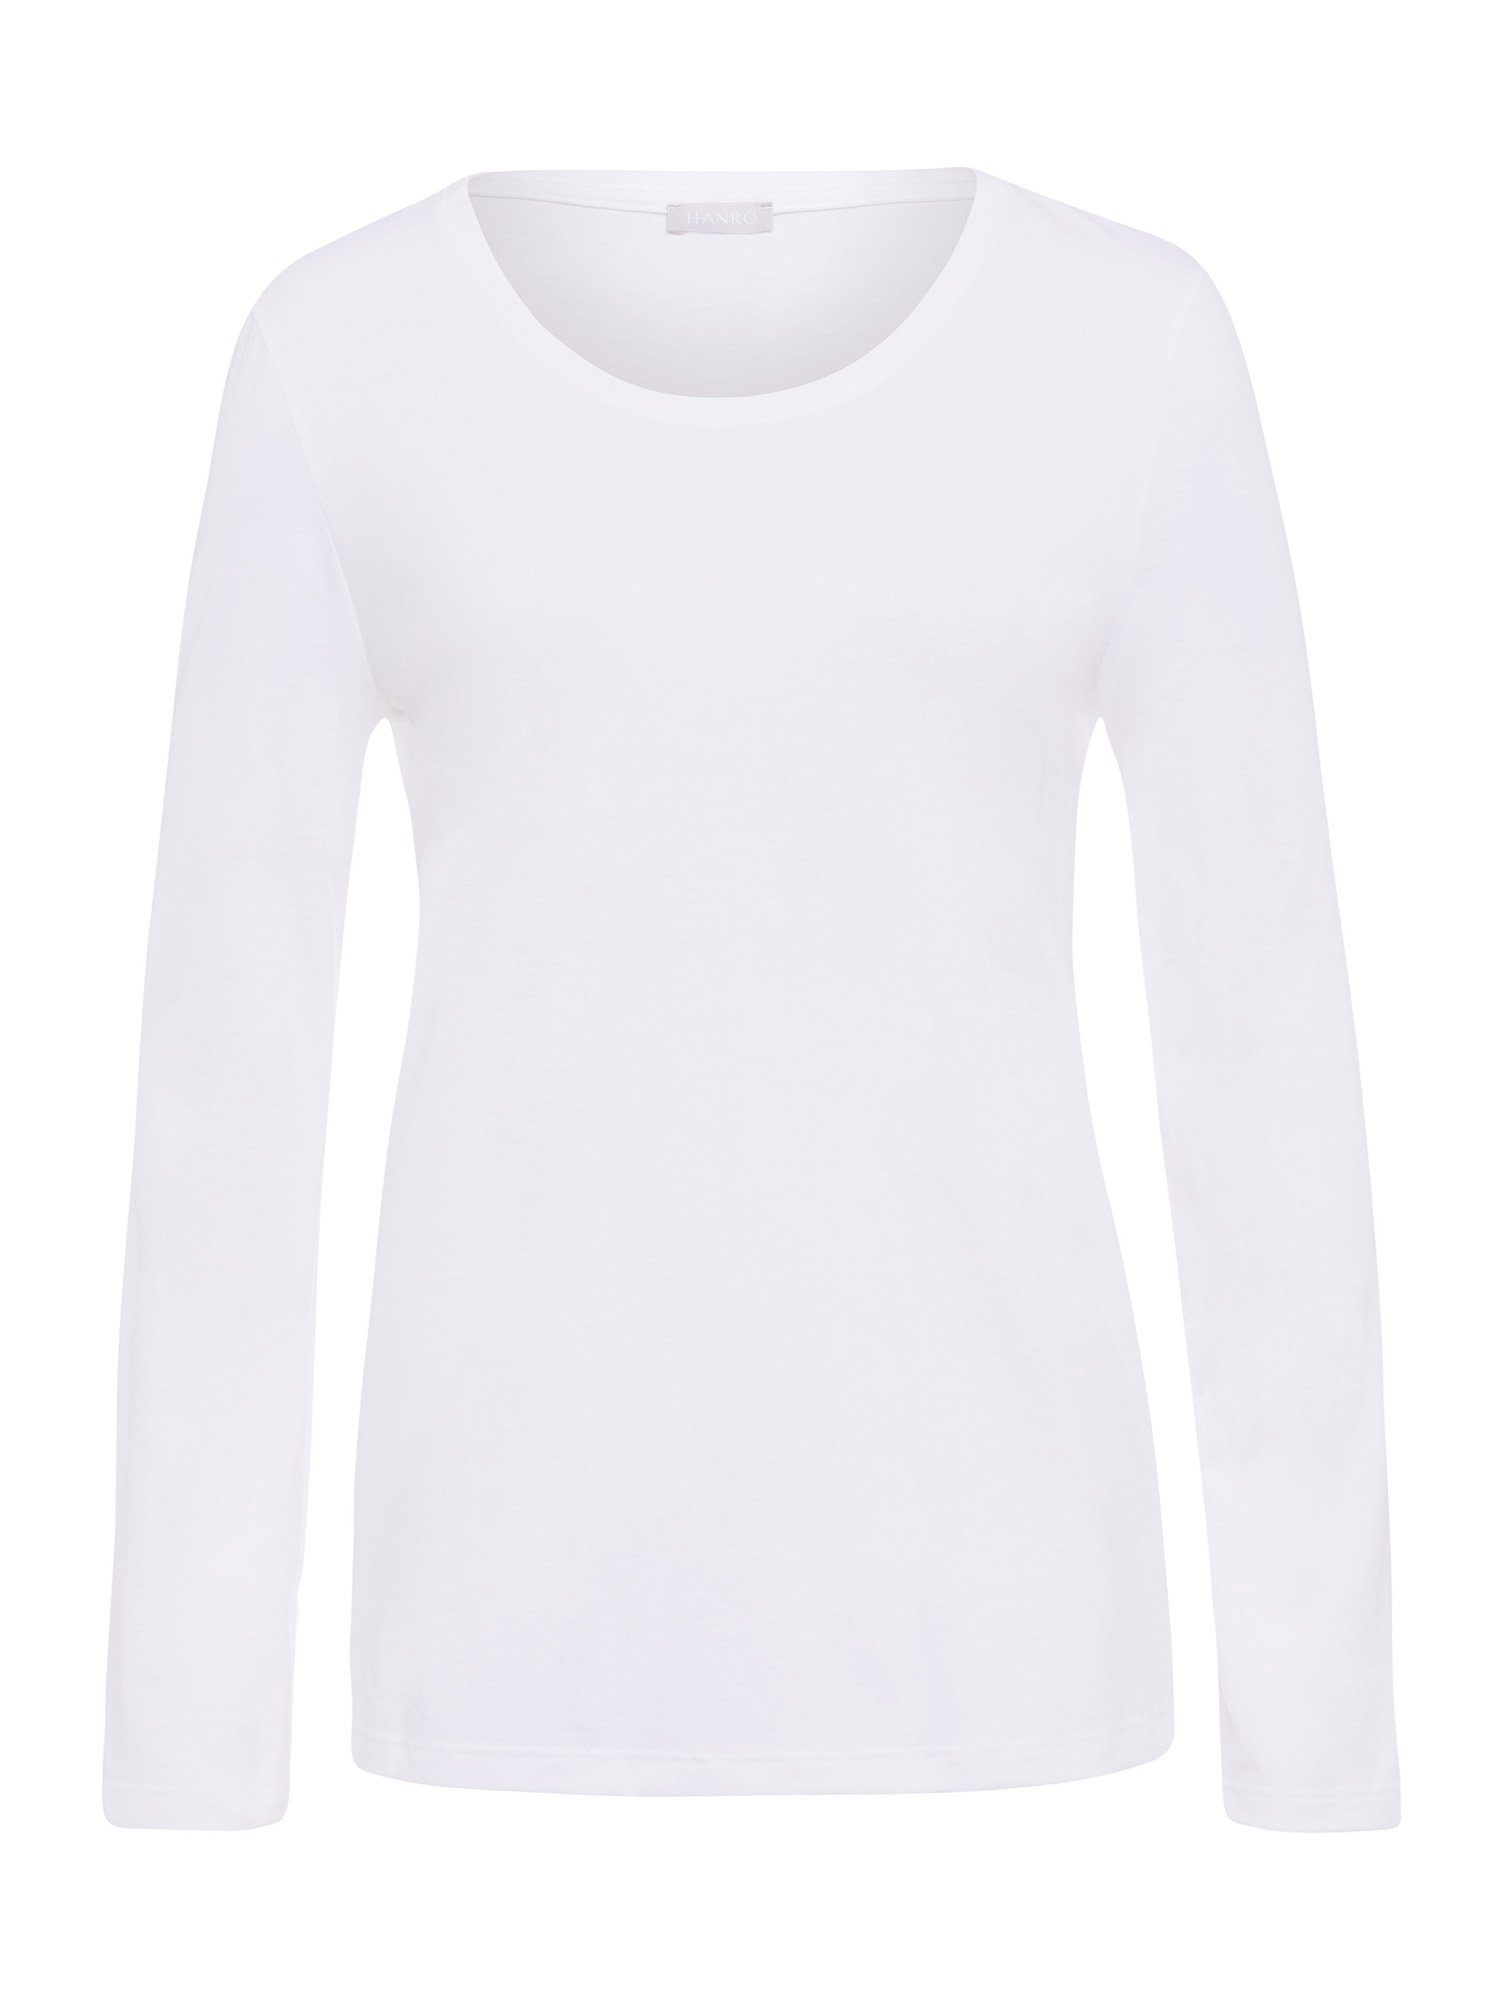 Hanro Sleep Lounge Pyjamaoberteil langarm shirt unterhemd & white